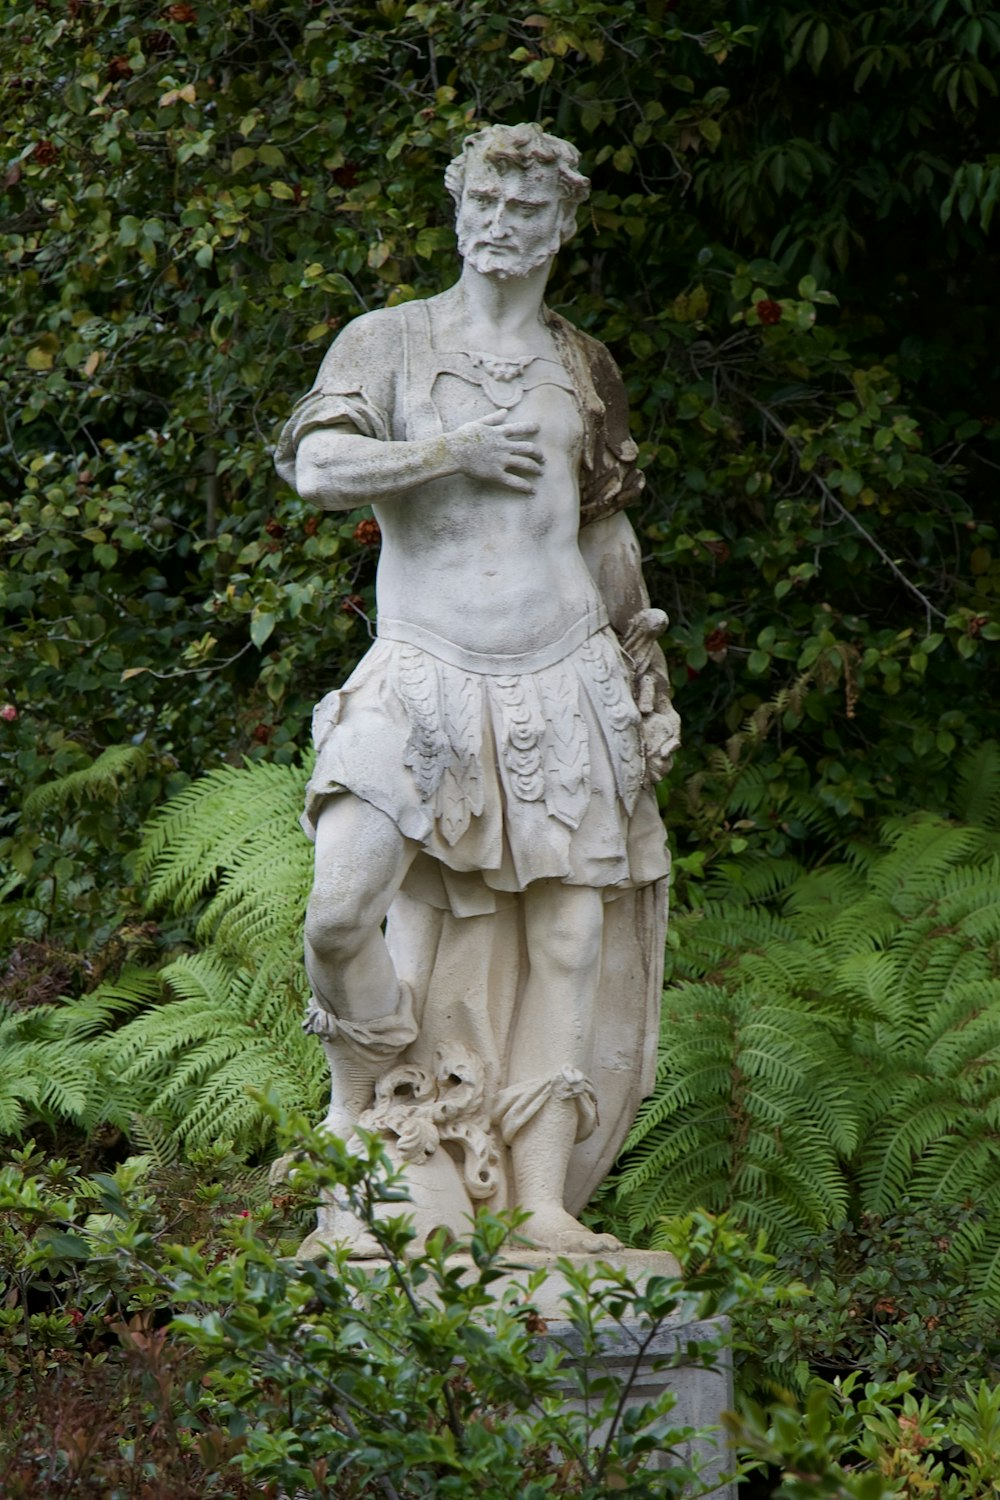 a statue of a man standing in a garden